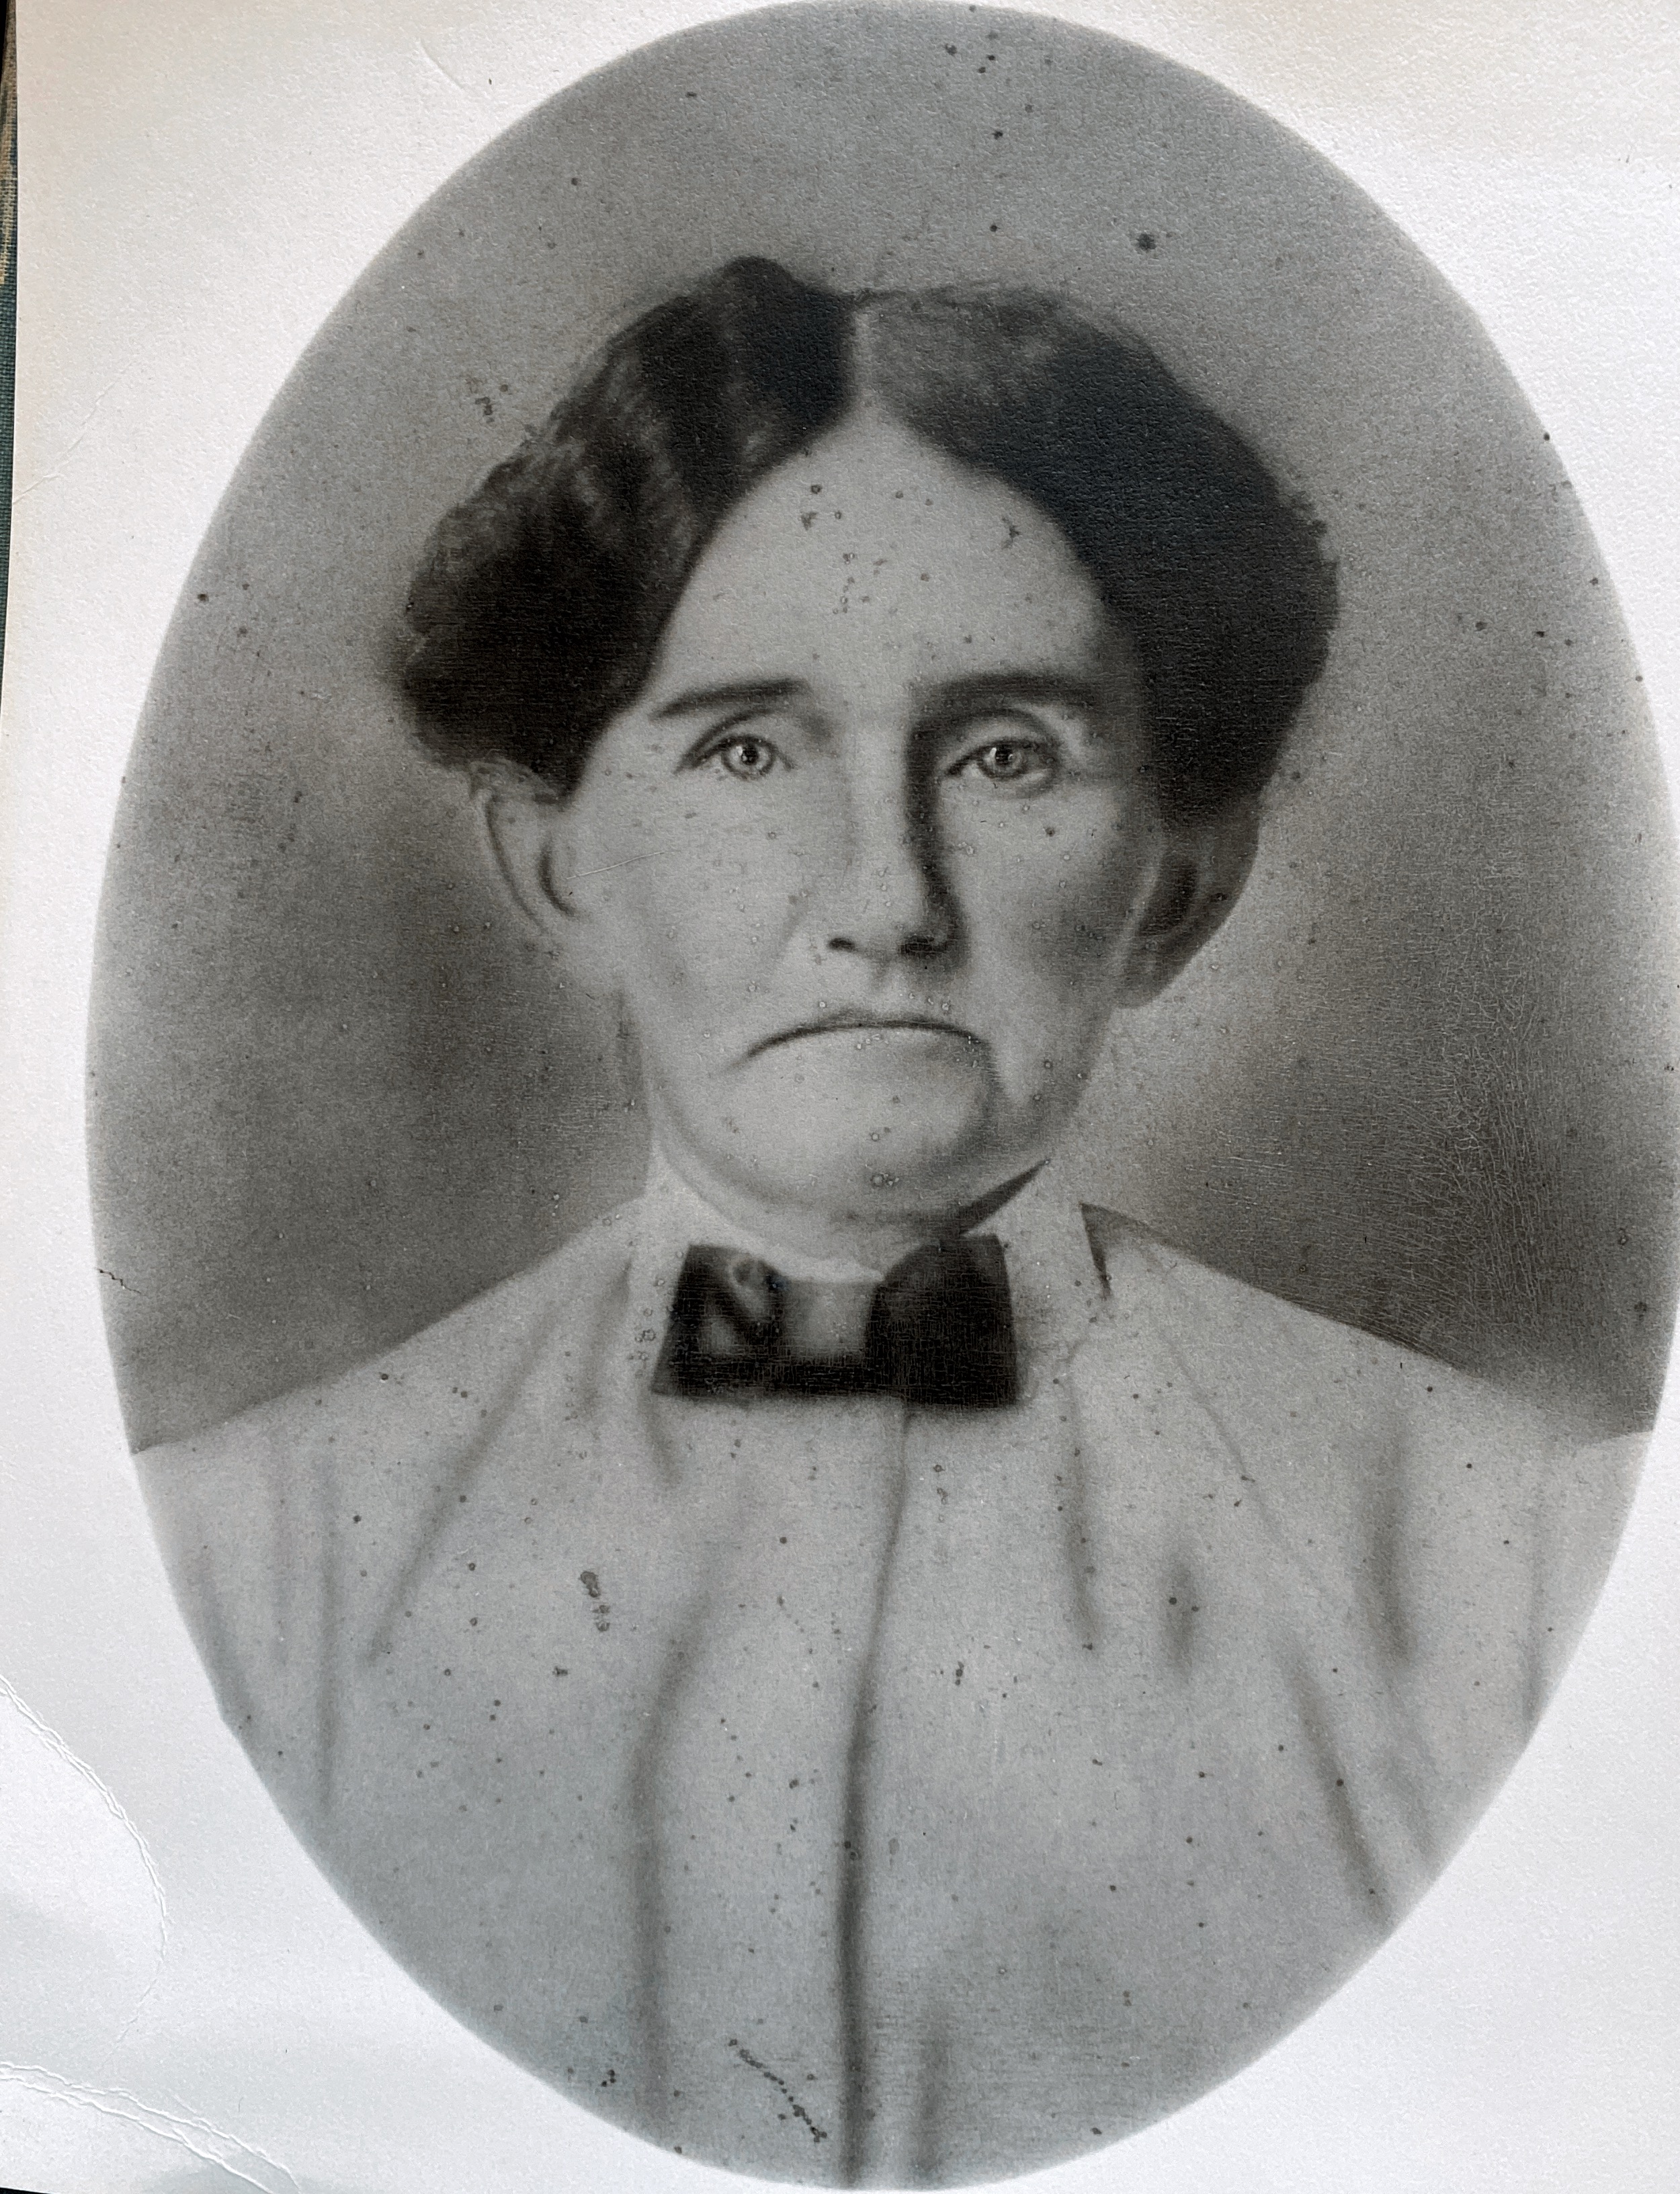 Harriett McCarley Trail
Born 04/25:1864
Died 06/19/1958
Daughter of John James McCarley
Wife of J. Ben Trail